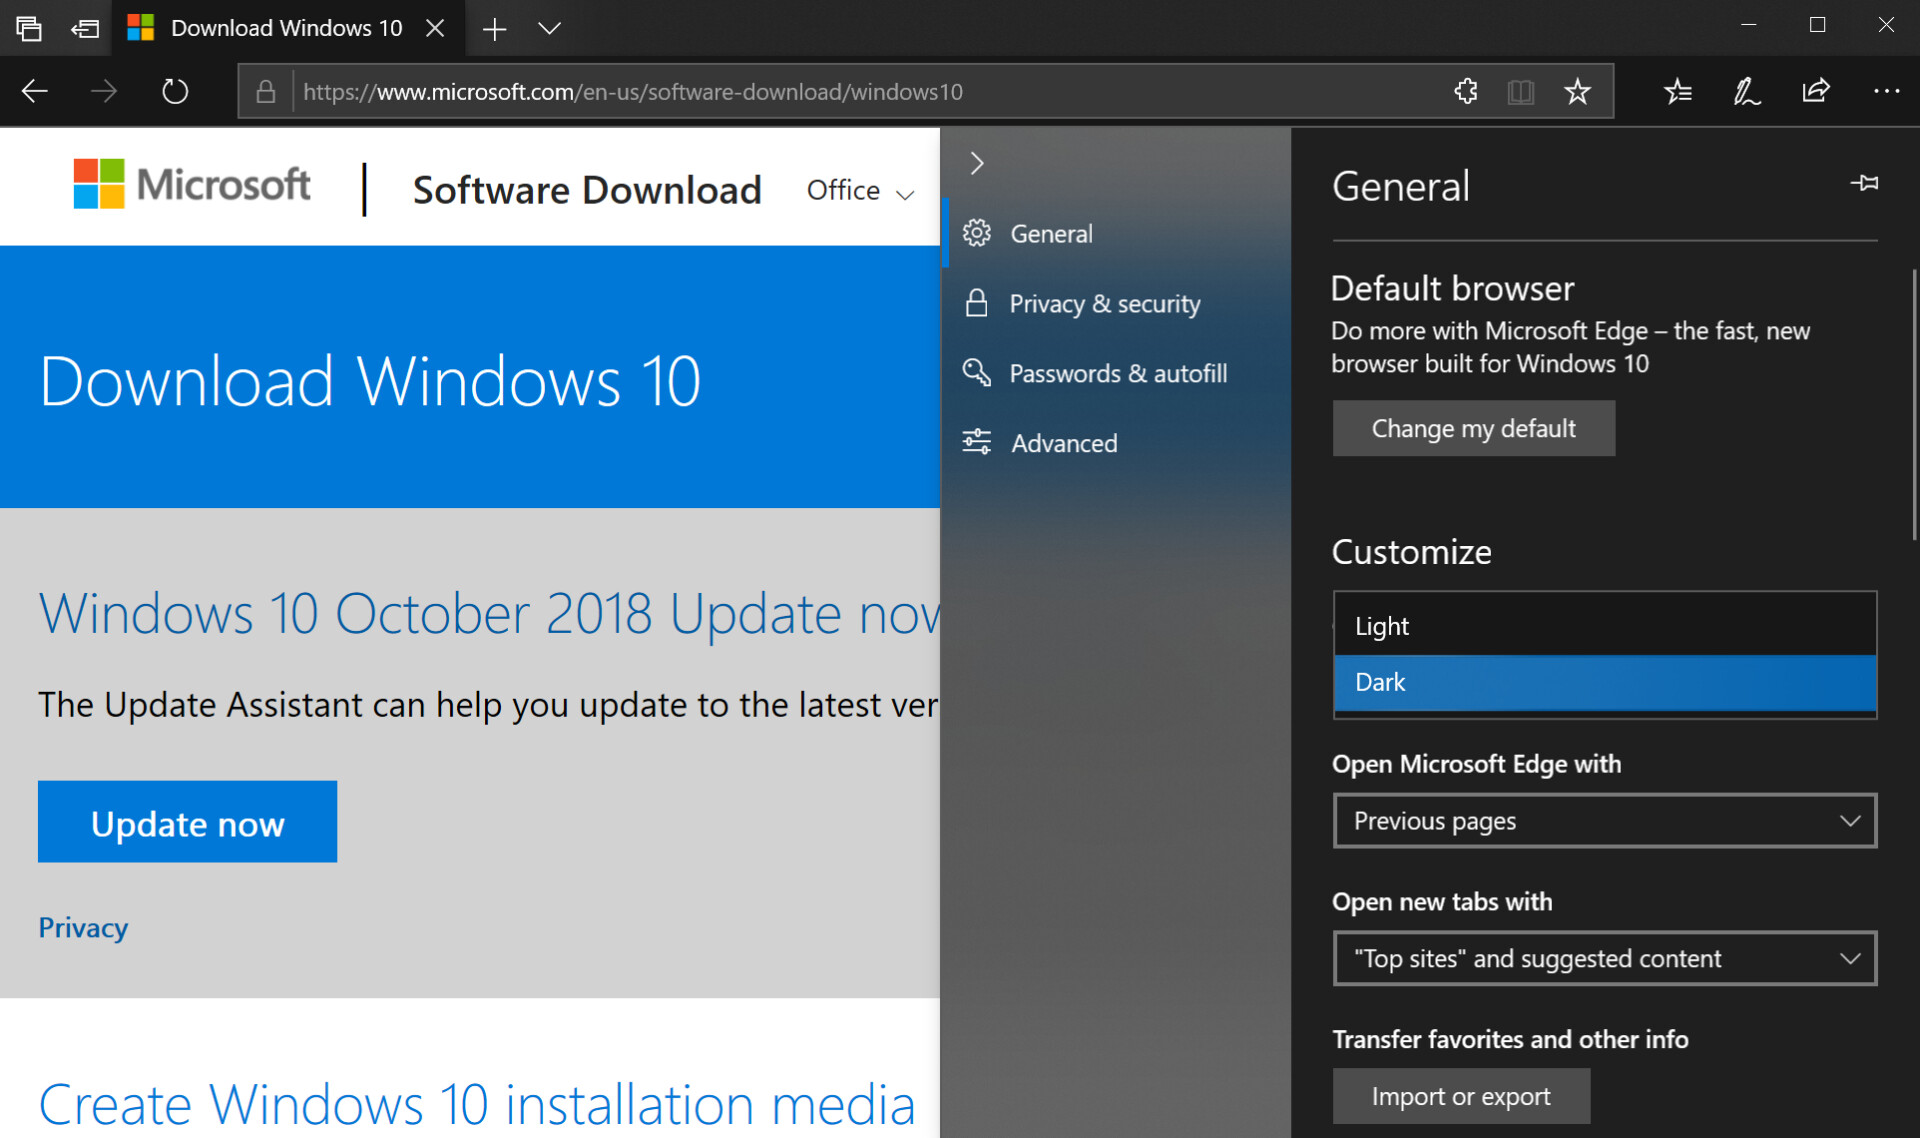 Microsoft Edge customize menu - How to enable dark mode in Windows 10